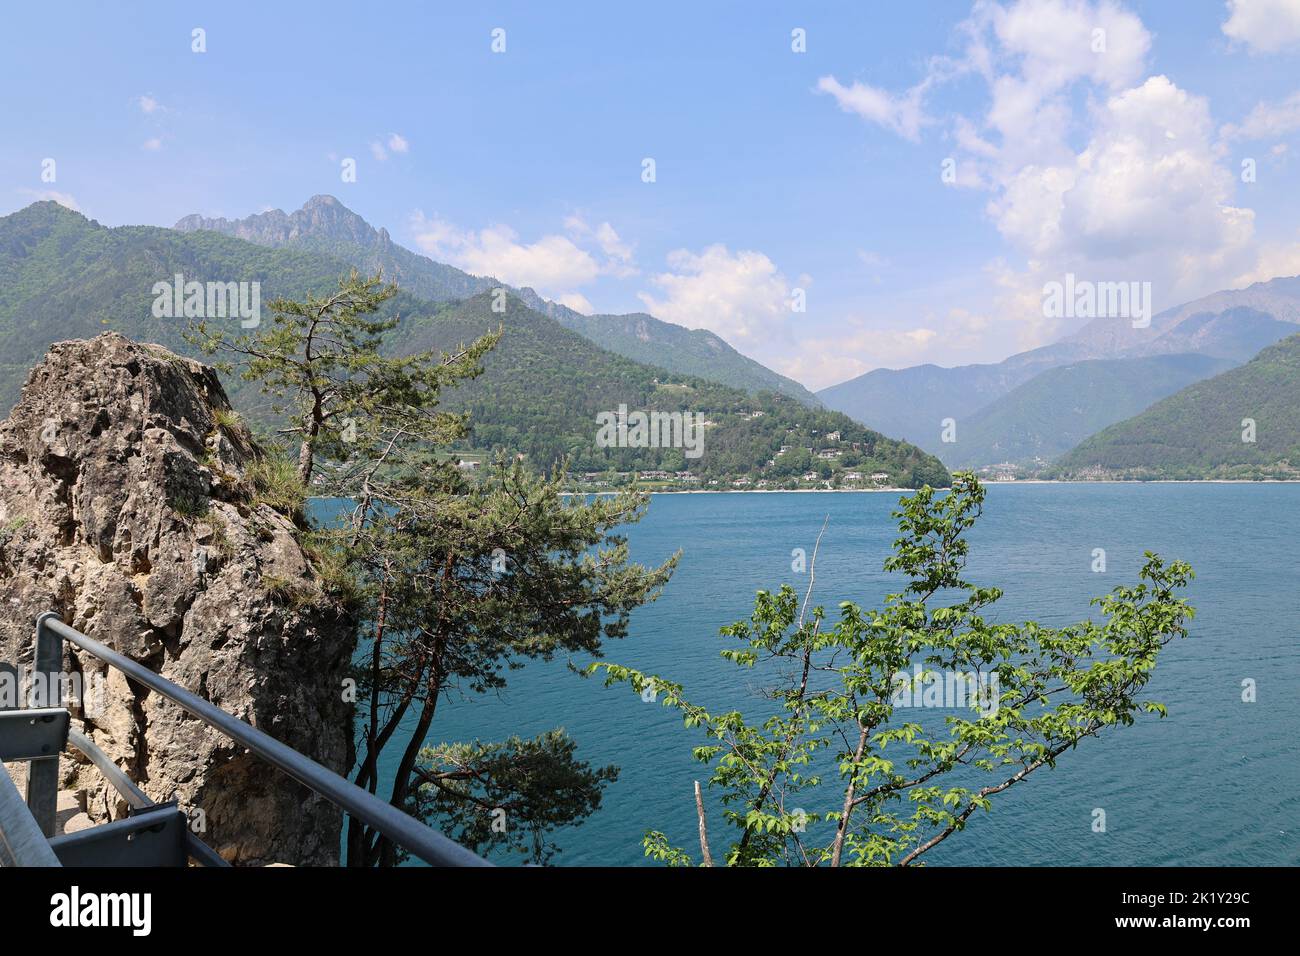 Impressionen vom Lago die Ledro in Italien Stock Photo